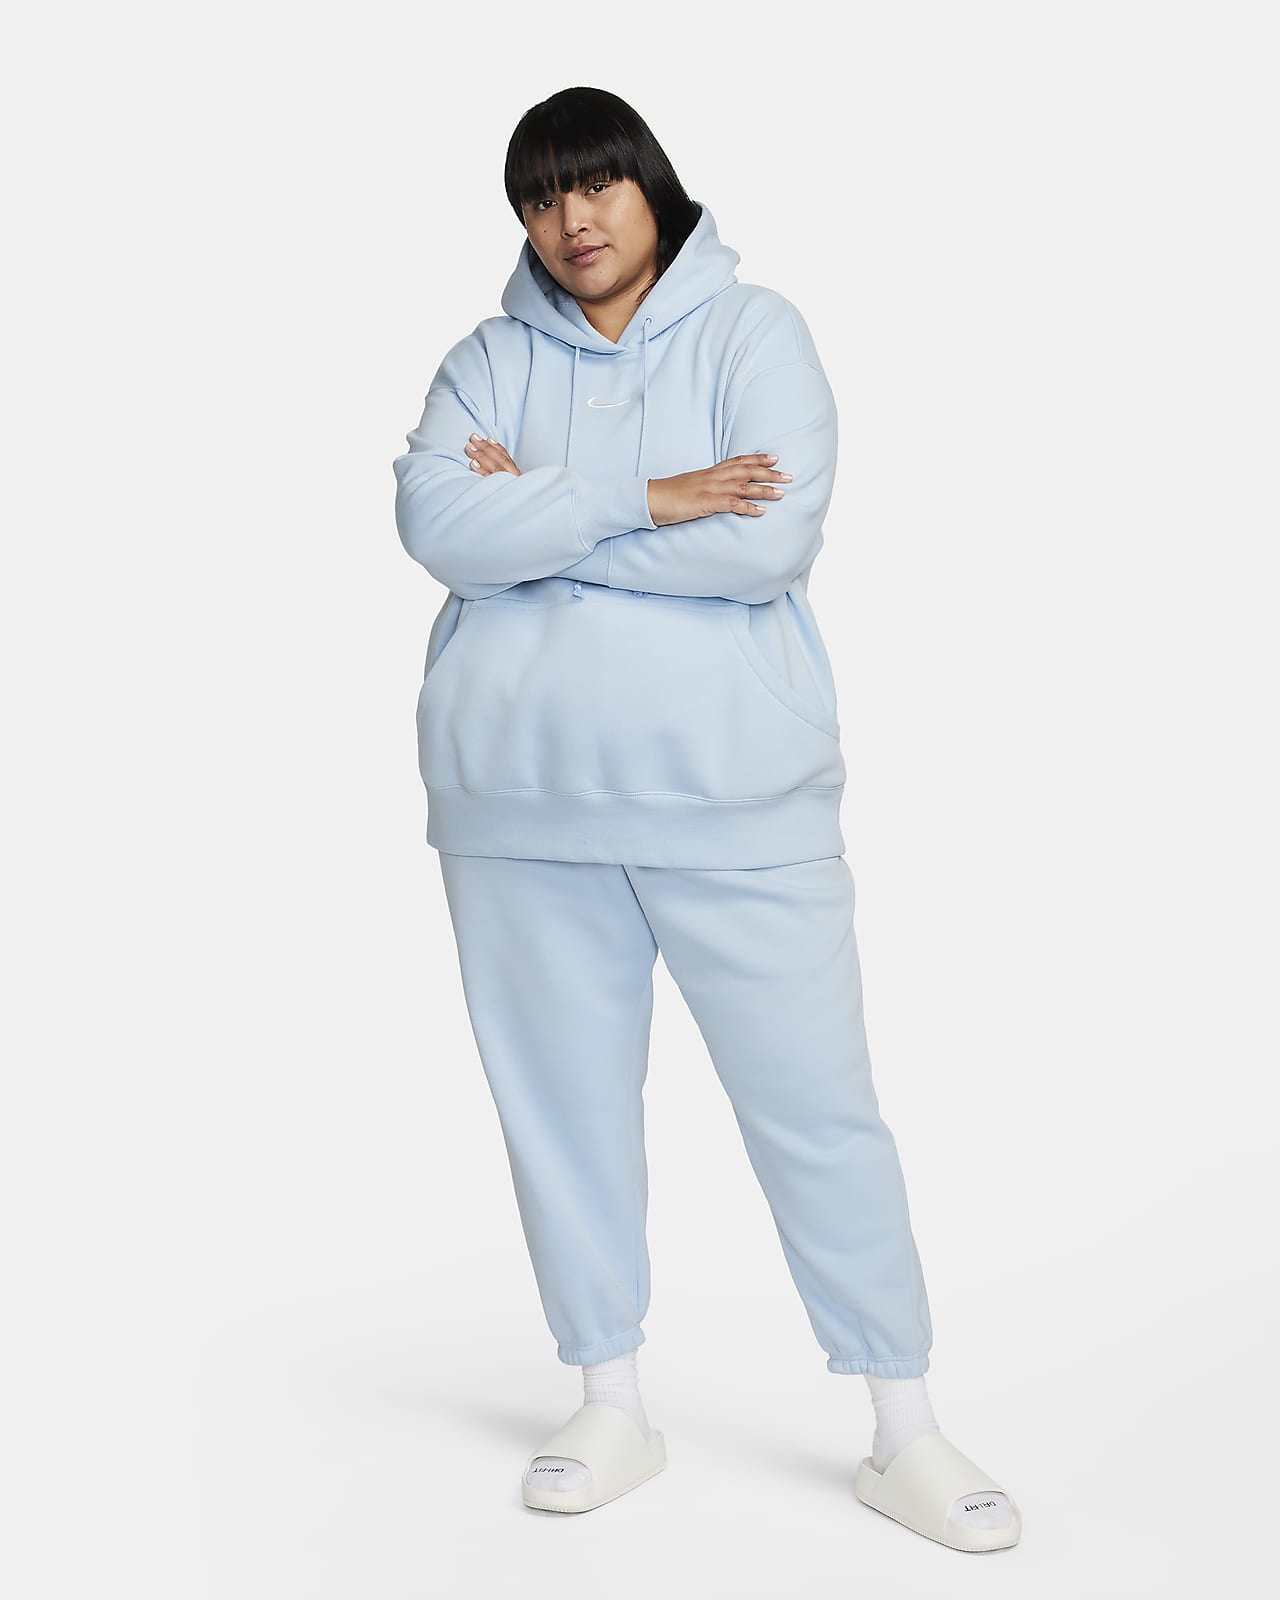 Nike Sportswear Phoenix Fleece Oversized Pullover Hoodie 'Amber Brown/Sail'  - DQ5860-225